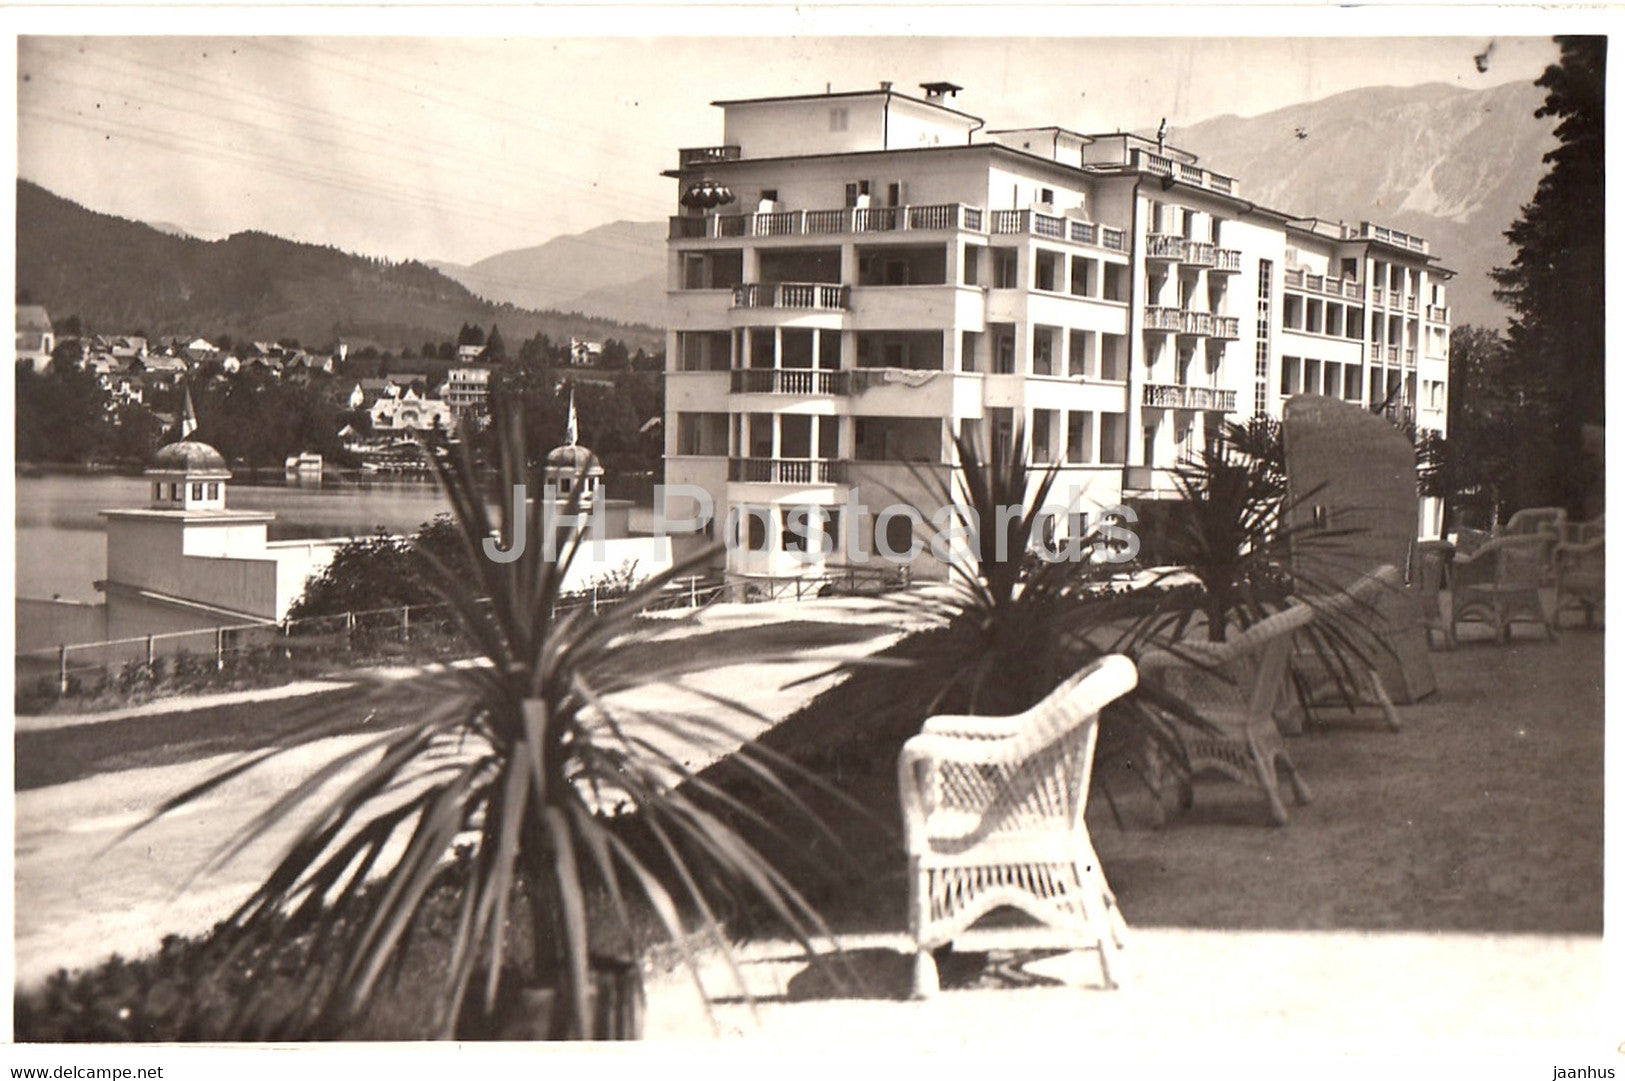 Grand Hotel Toplice - Bled - old postcard - 1931 - Slovenia - Yugoslavia - used - JH Postcards